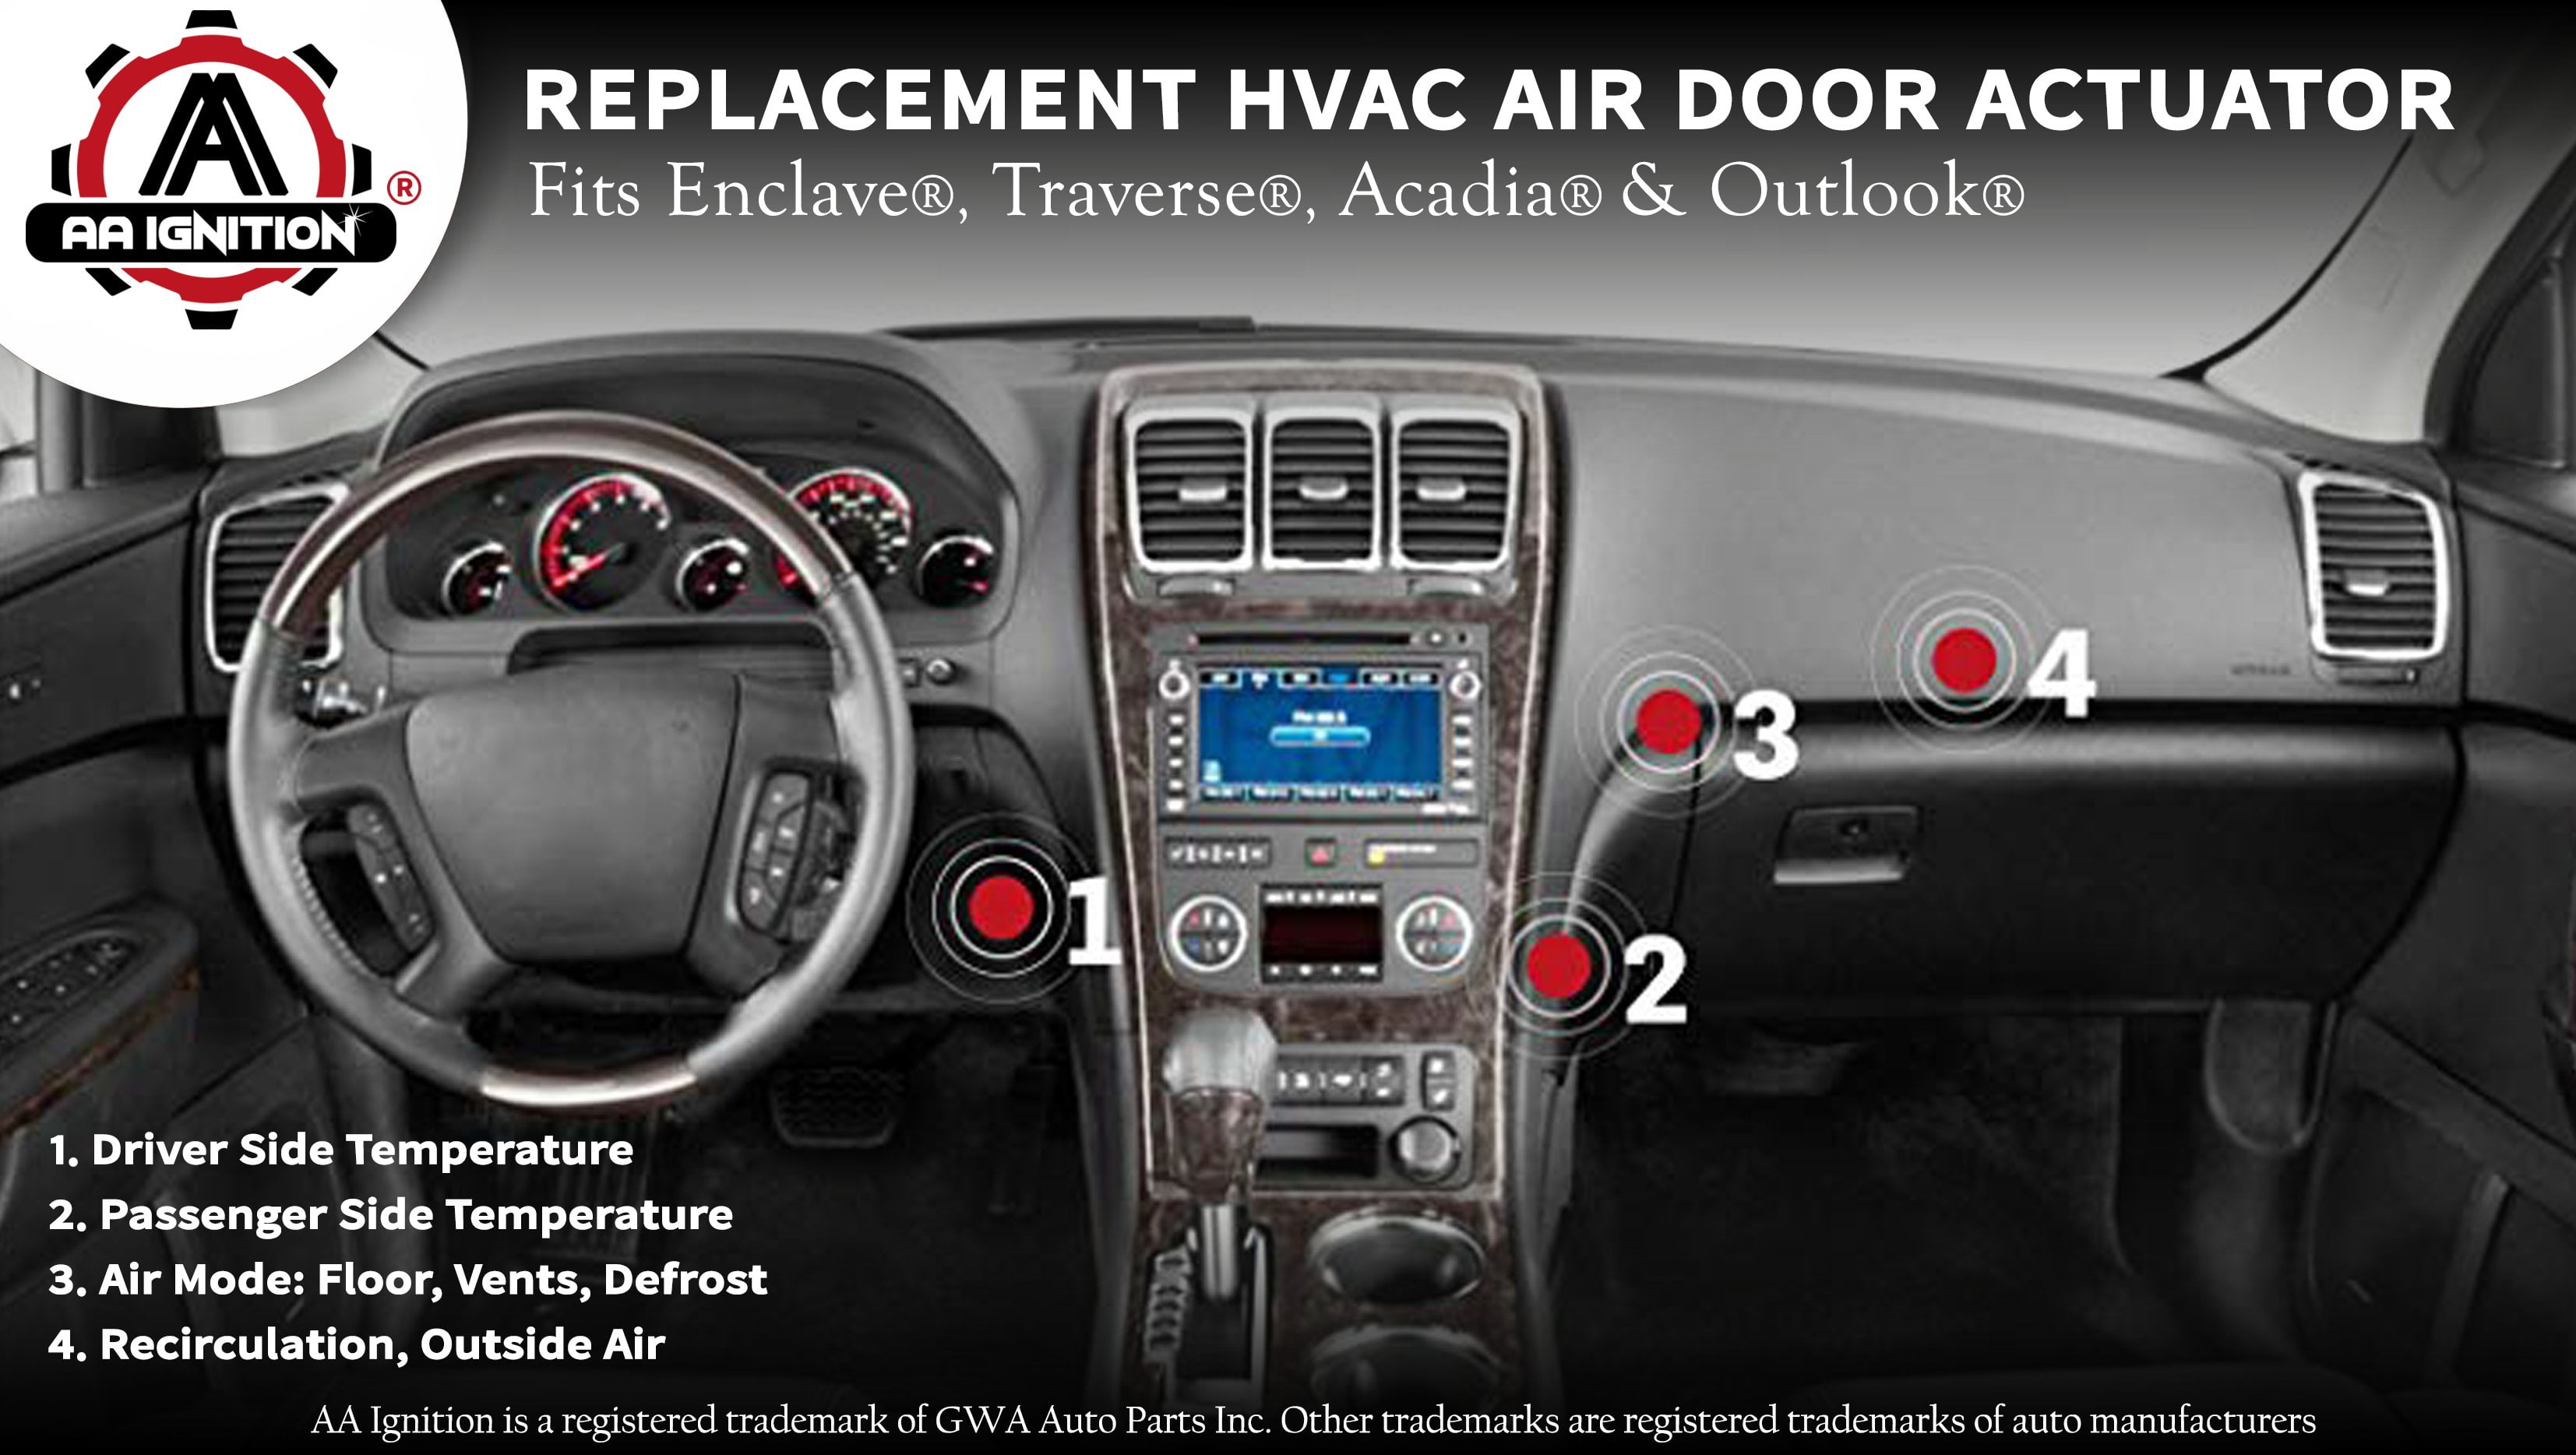 604-140 HVAC Air Door Actuator for 2009-2012 Chevrolet Traverse 2008-2012 Buick Enclave 2007-2012 GMC Acadia Replaces OE # 15-73989 20826182 1573989 AC Heater Blend Door Actuator 